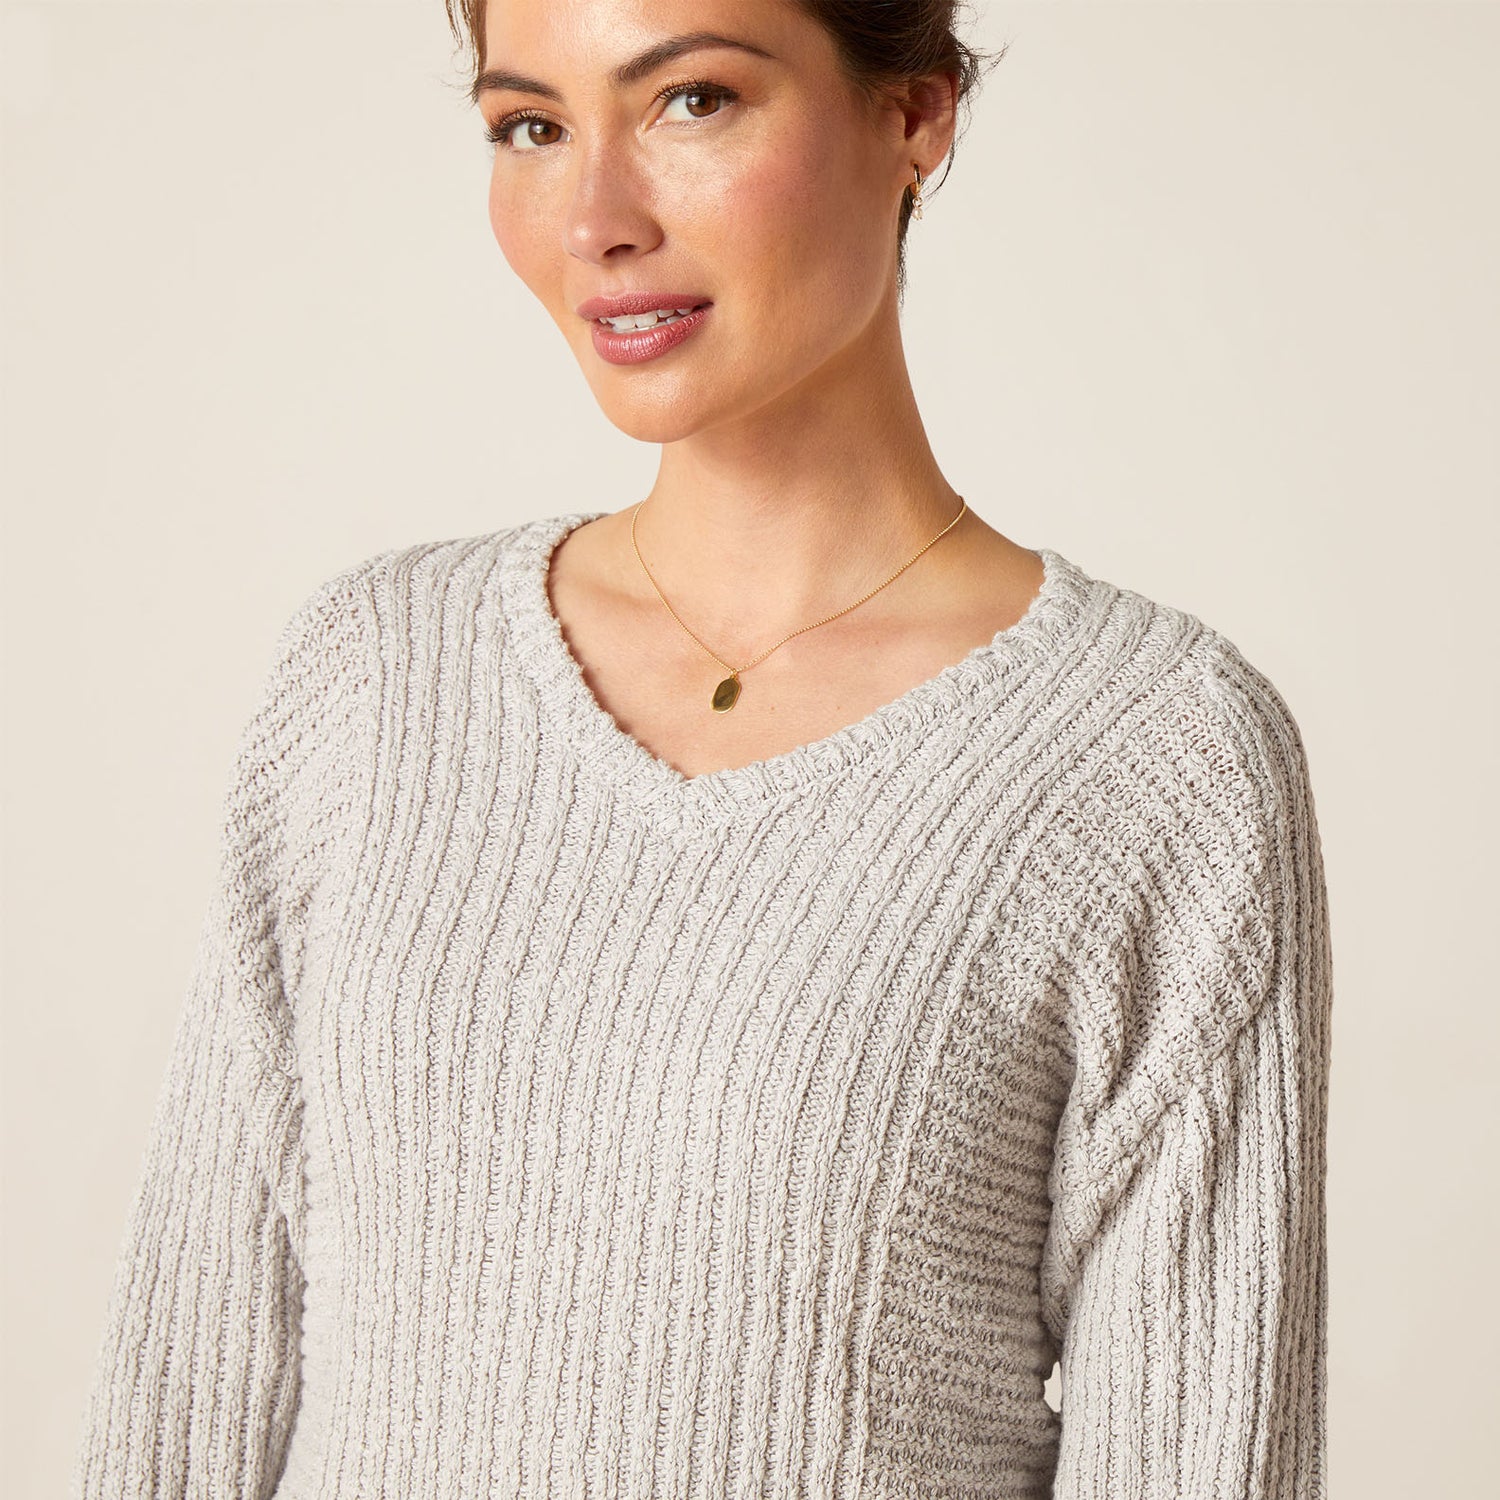 Ariat Womens Daneway Sweater